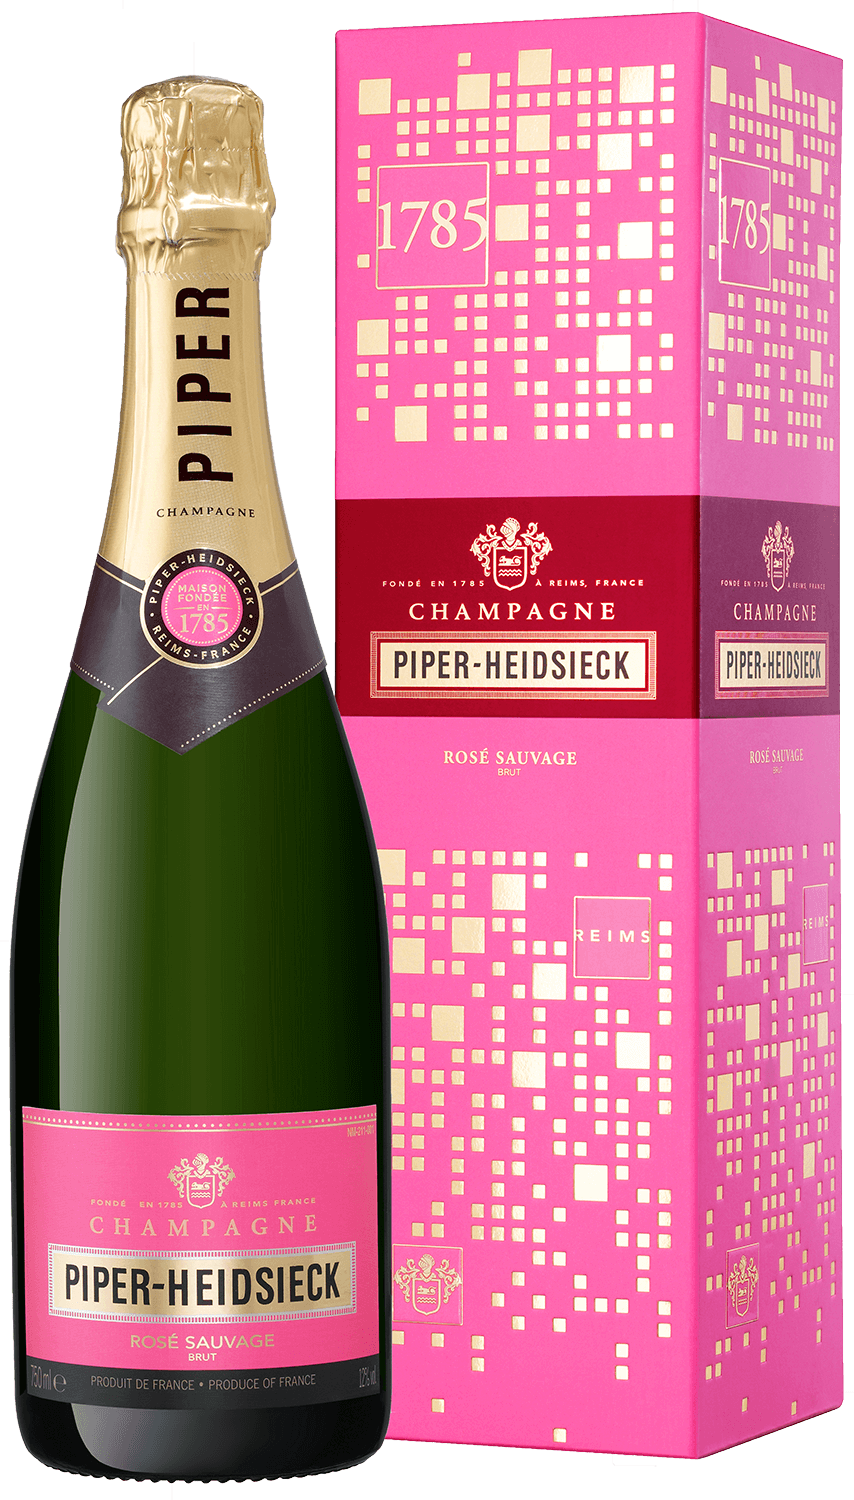 Piper-Heidsieck Sauvage Rose Brut Champagne AOC (gift box) g h mumm grand cordon rose champagne aoc brut gift box